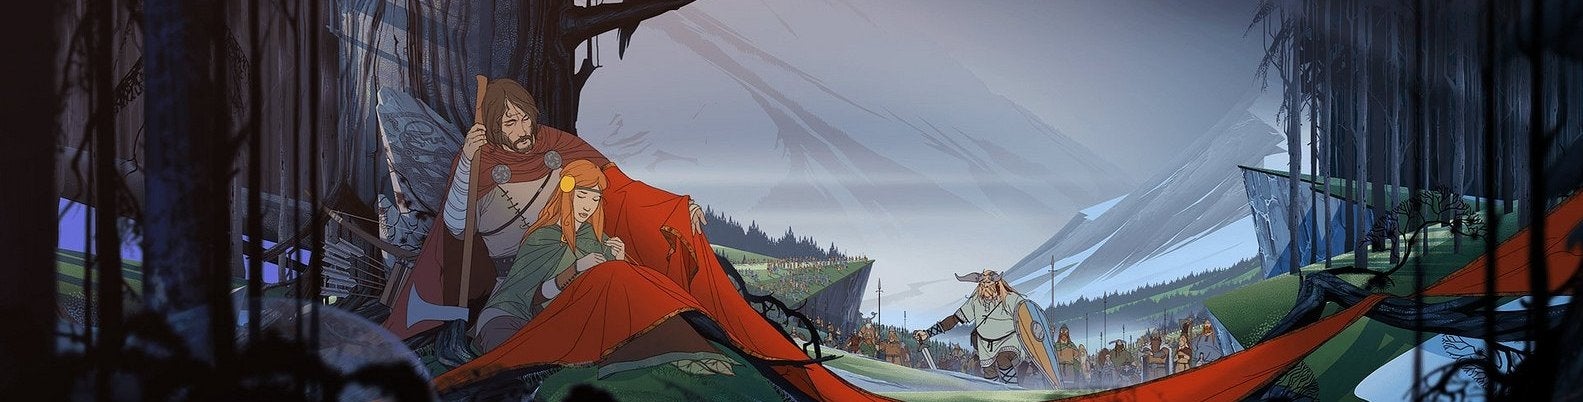 Afbeeldingen van The Banner Saga, Armikrog, Kyn, Toren naar PlayStation 4